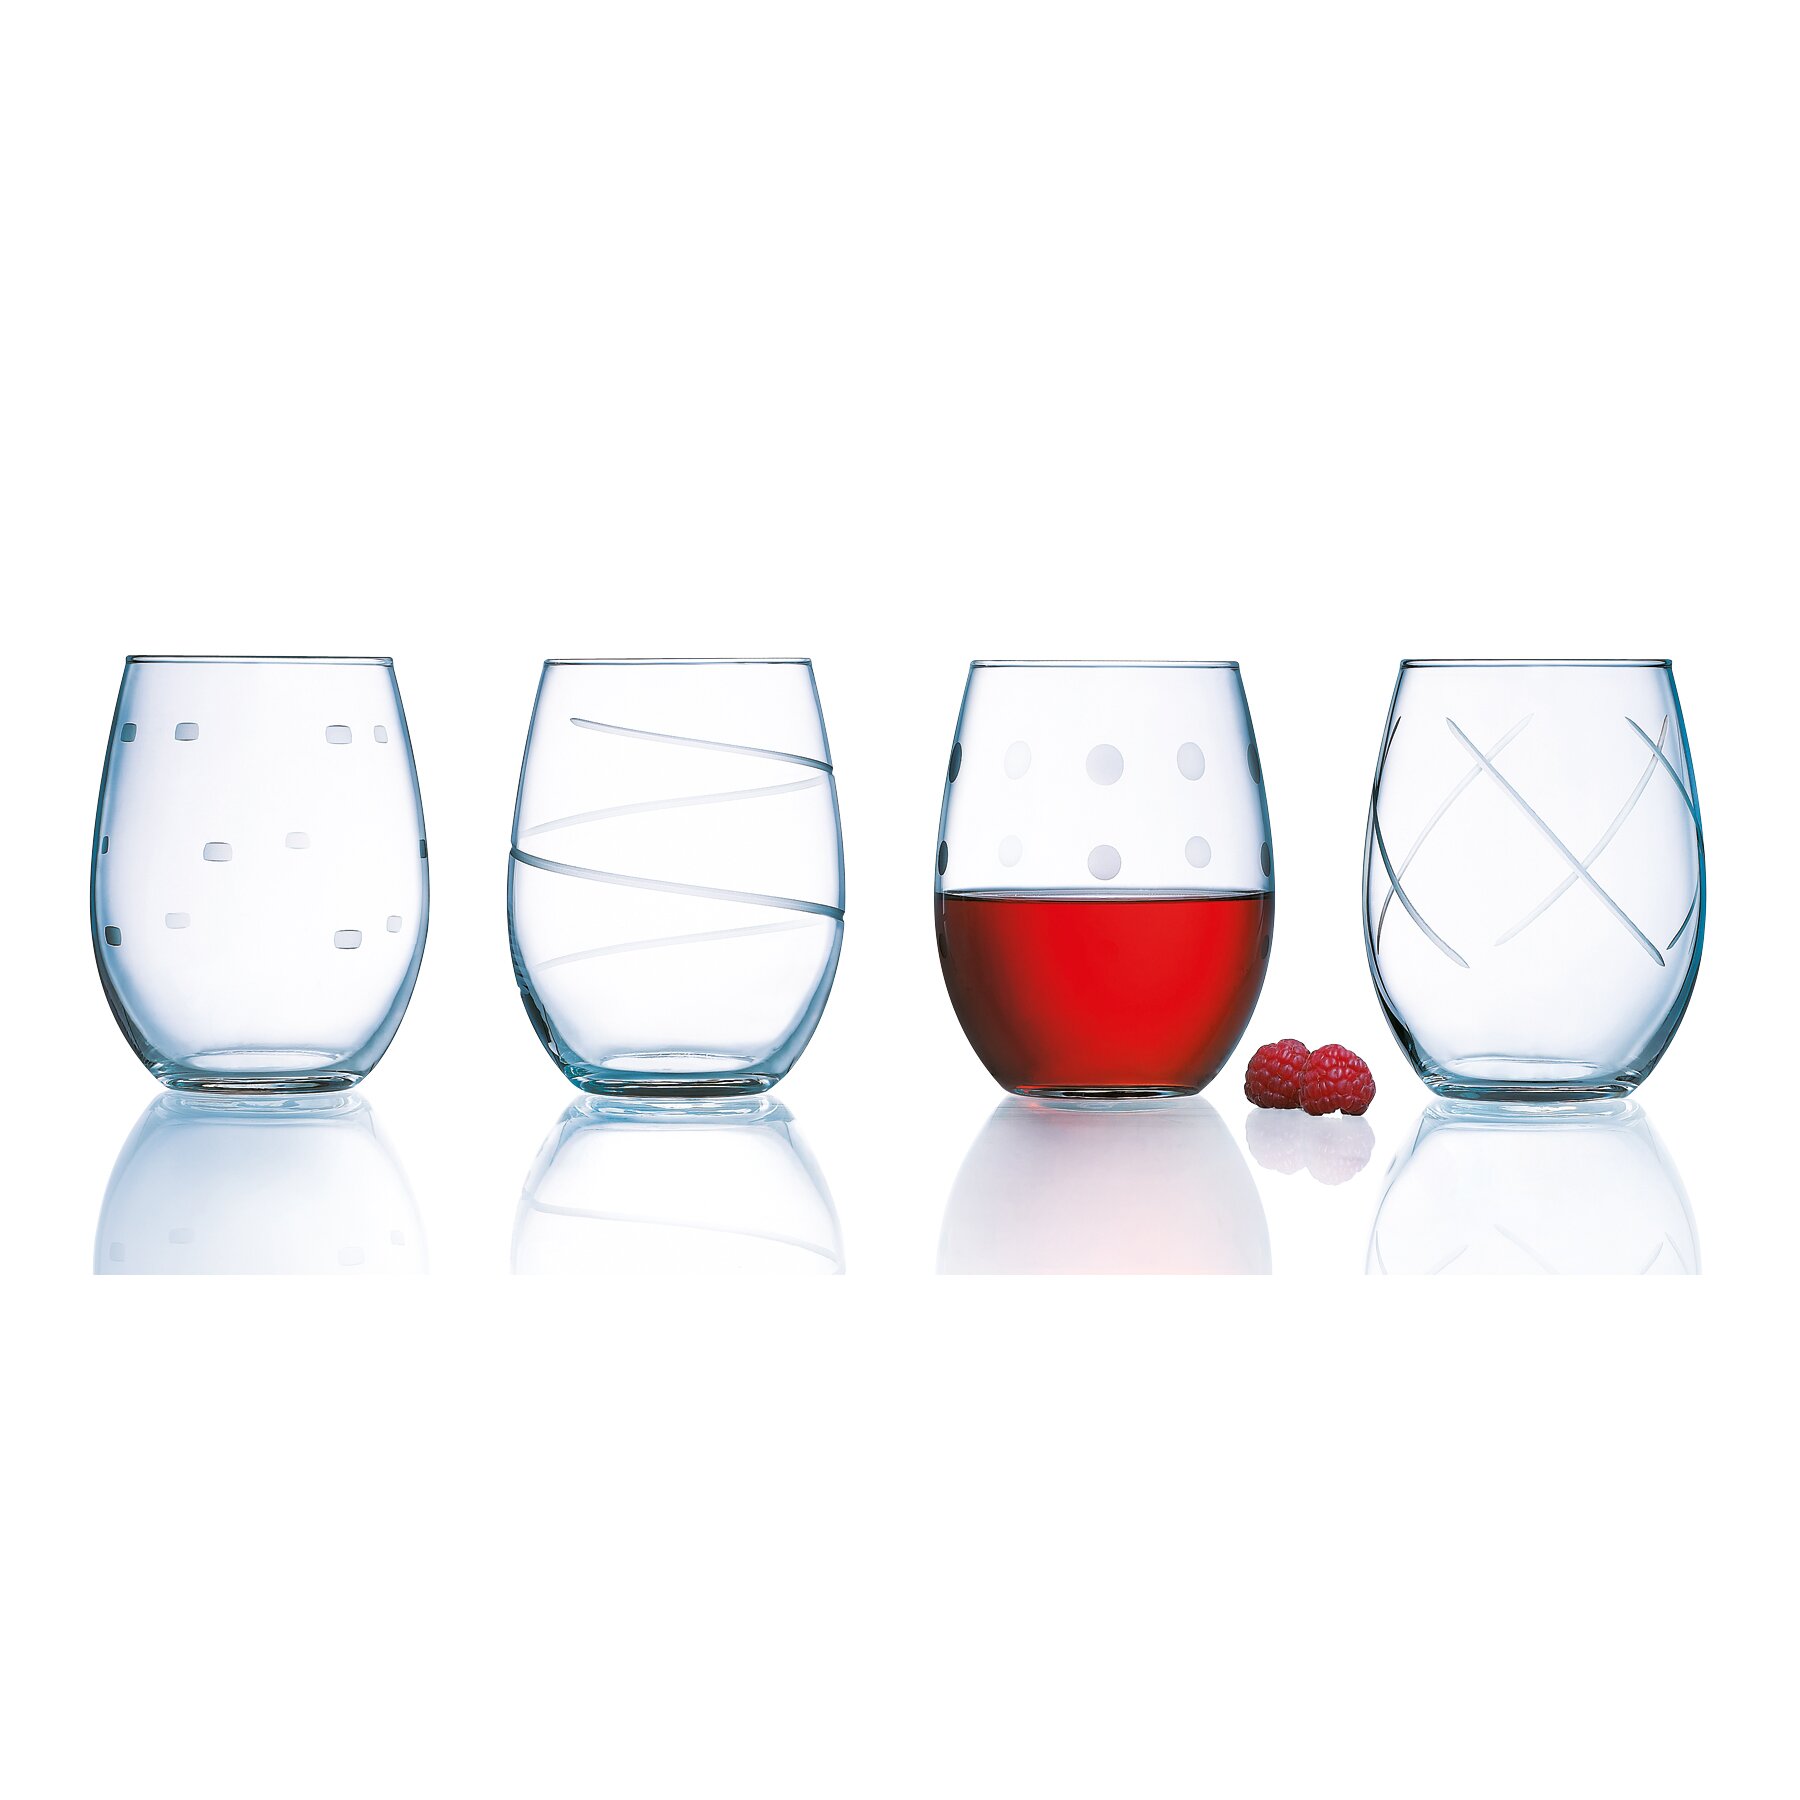 Luminarc Soho 21 Oz Stemless Wine Glass And Reviews Wayfair 0359